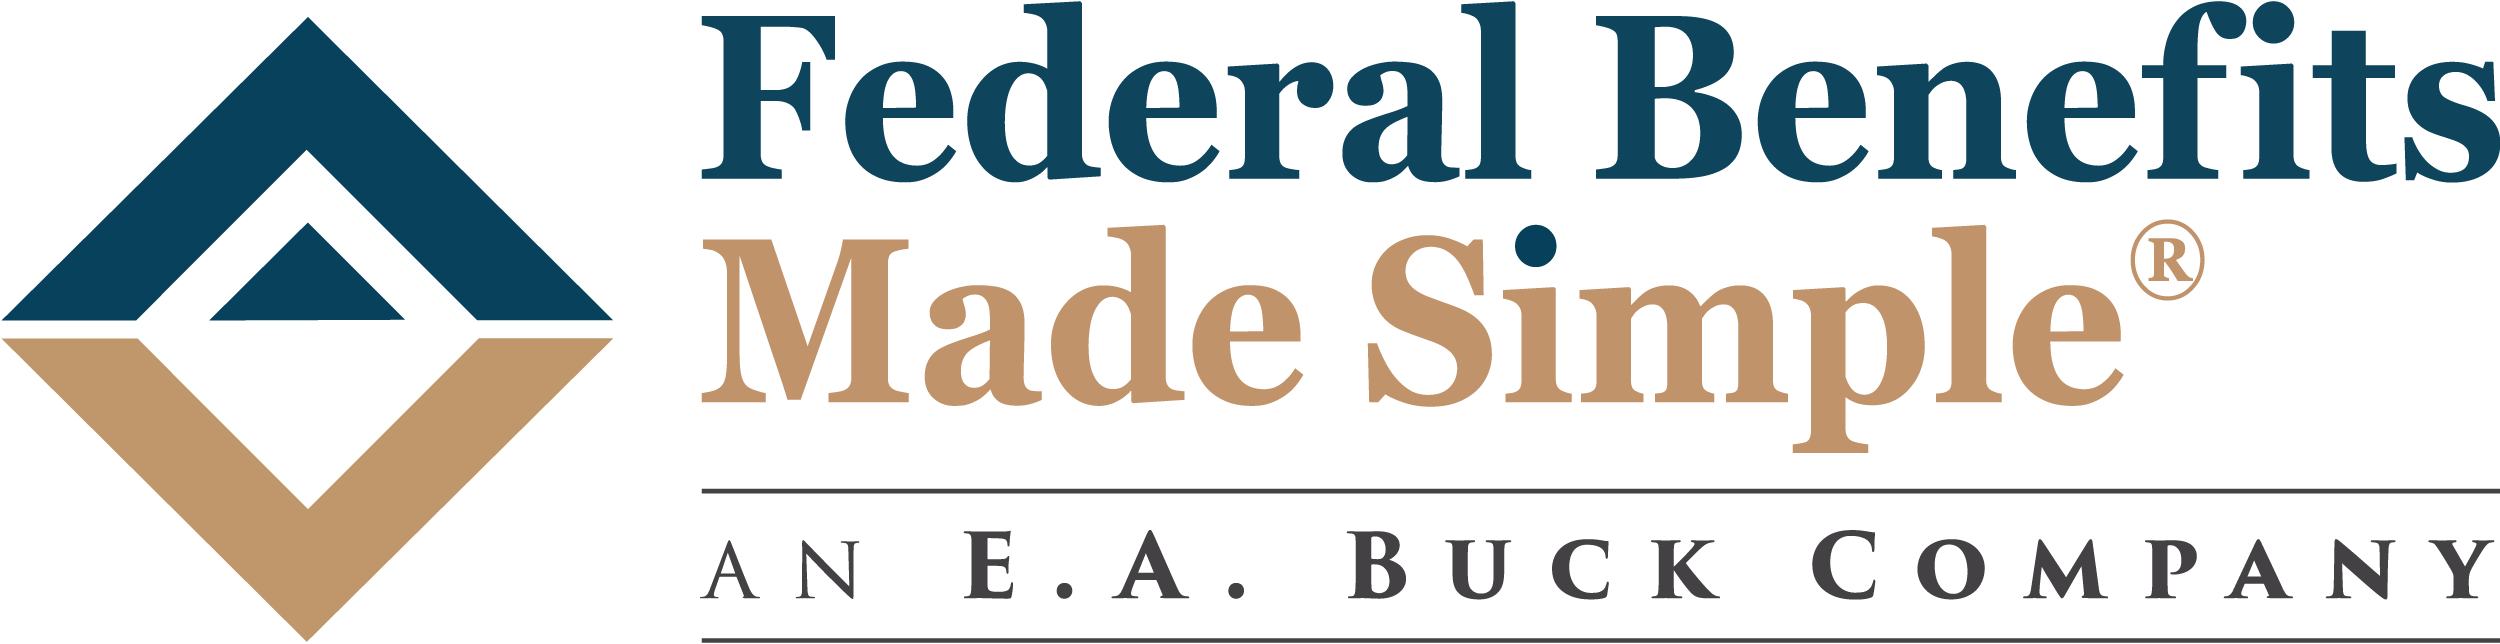 Federal Benefits Made Simple Logo E.A. Buck Company